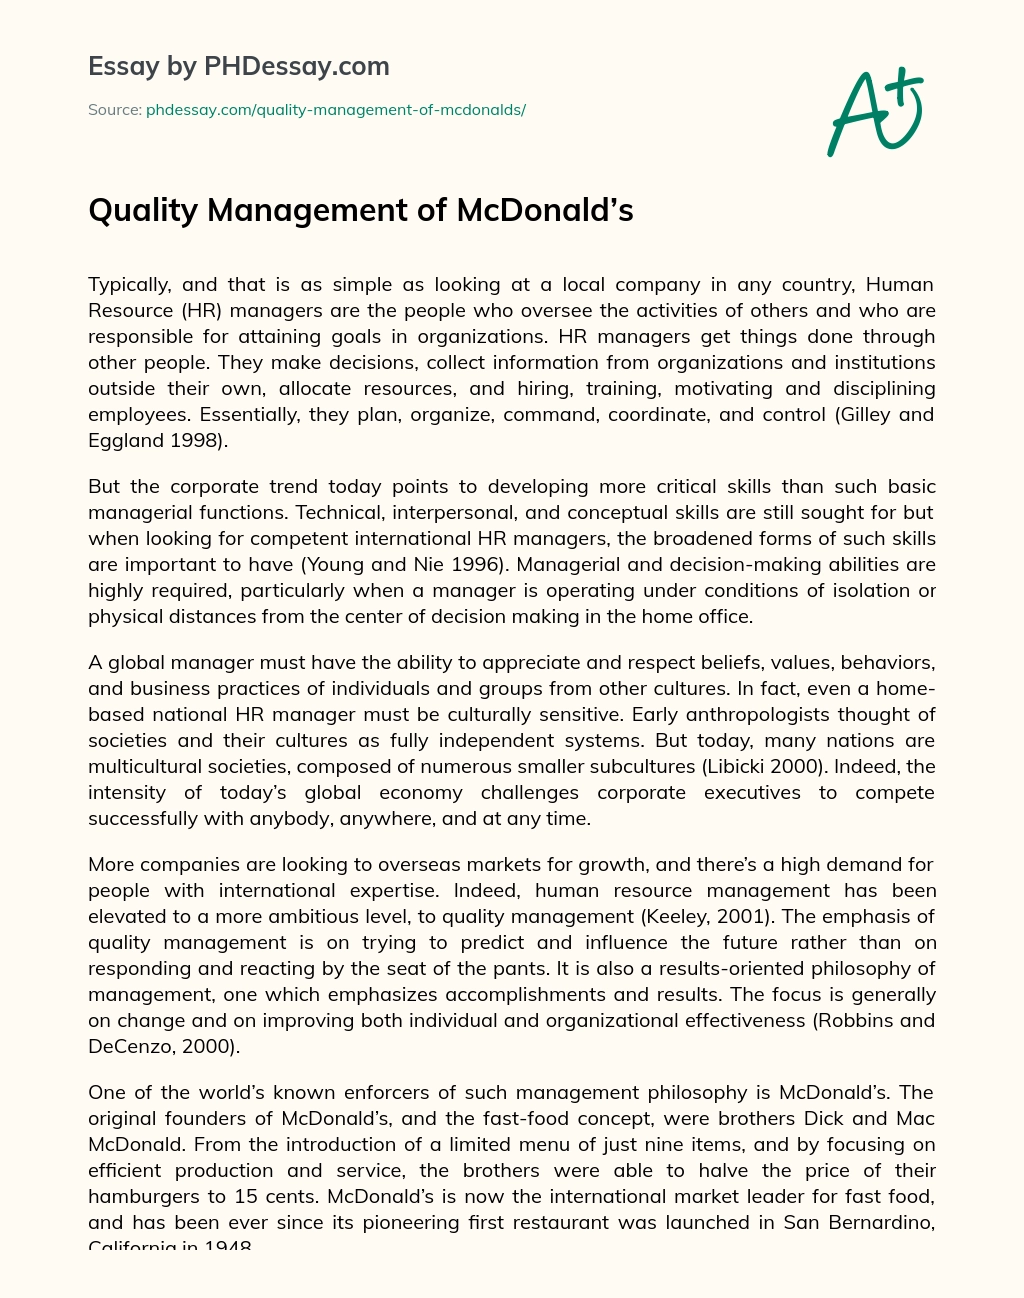 Quality Management of McDonald’s essay